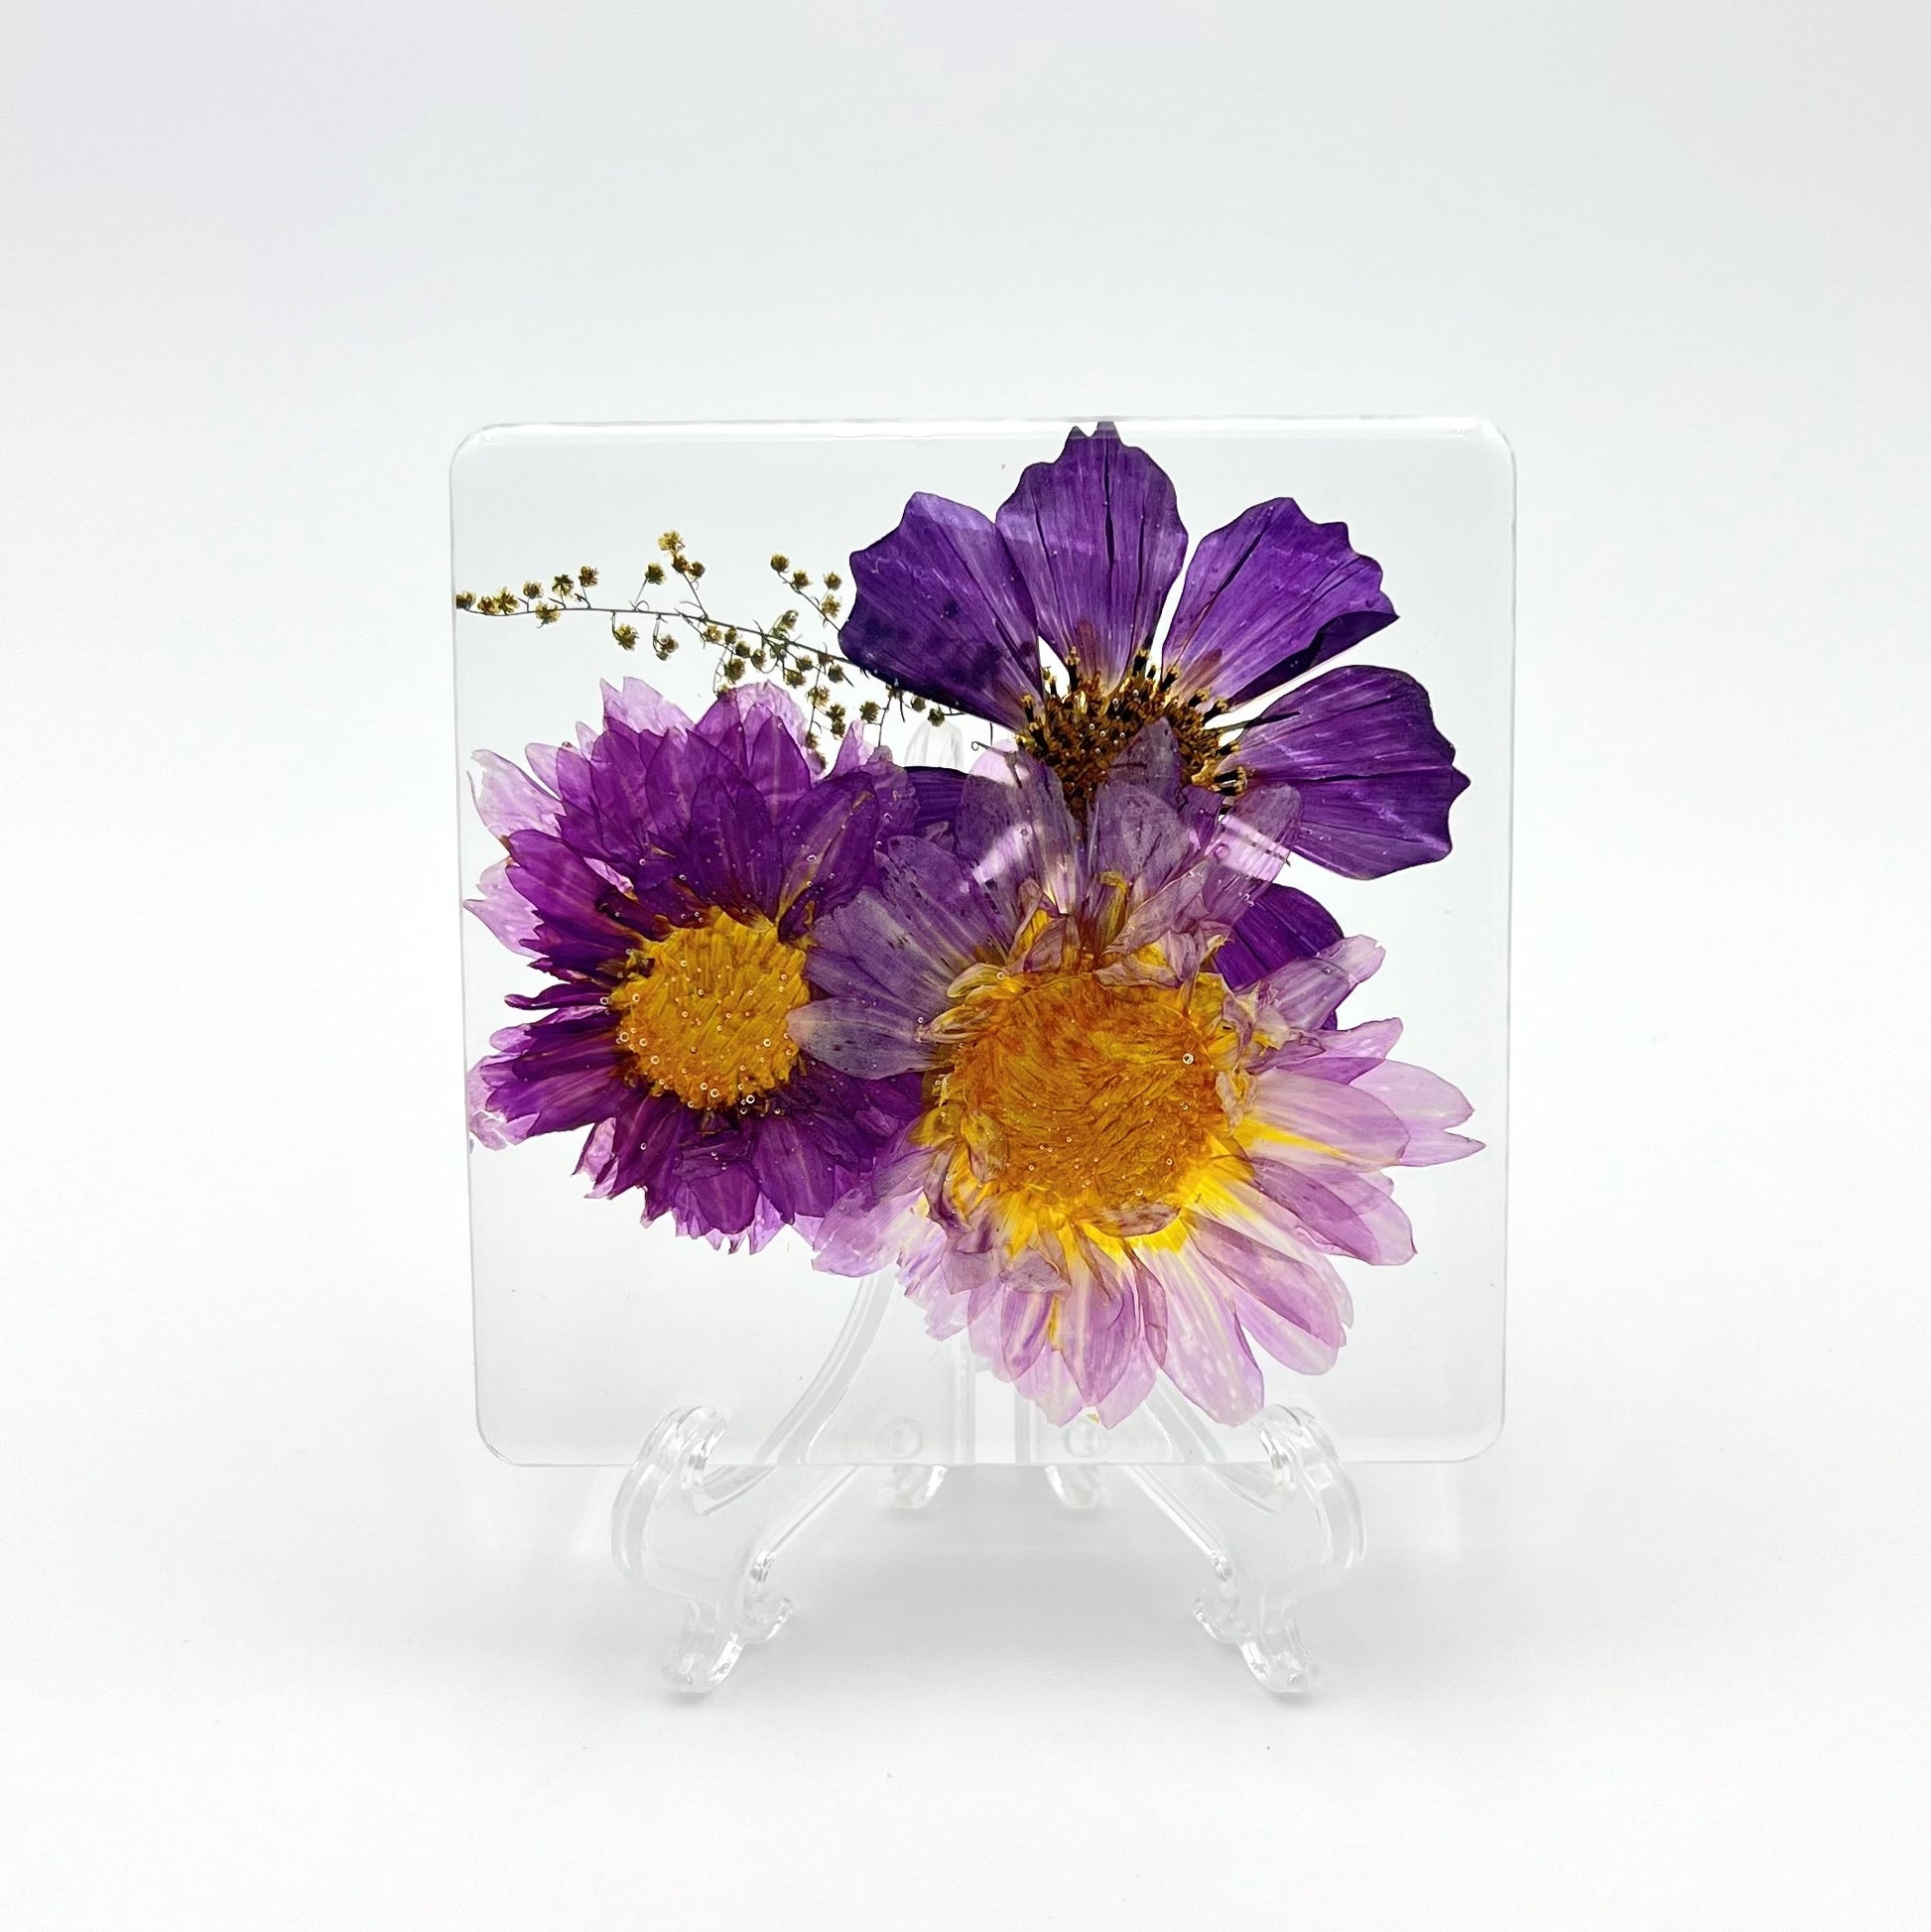 Art 101 Crafts Flower Resin Coaster Kit (40076MB)